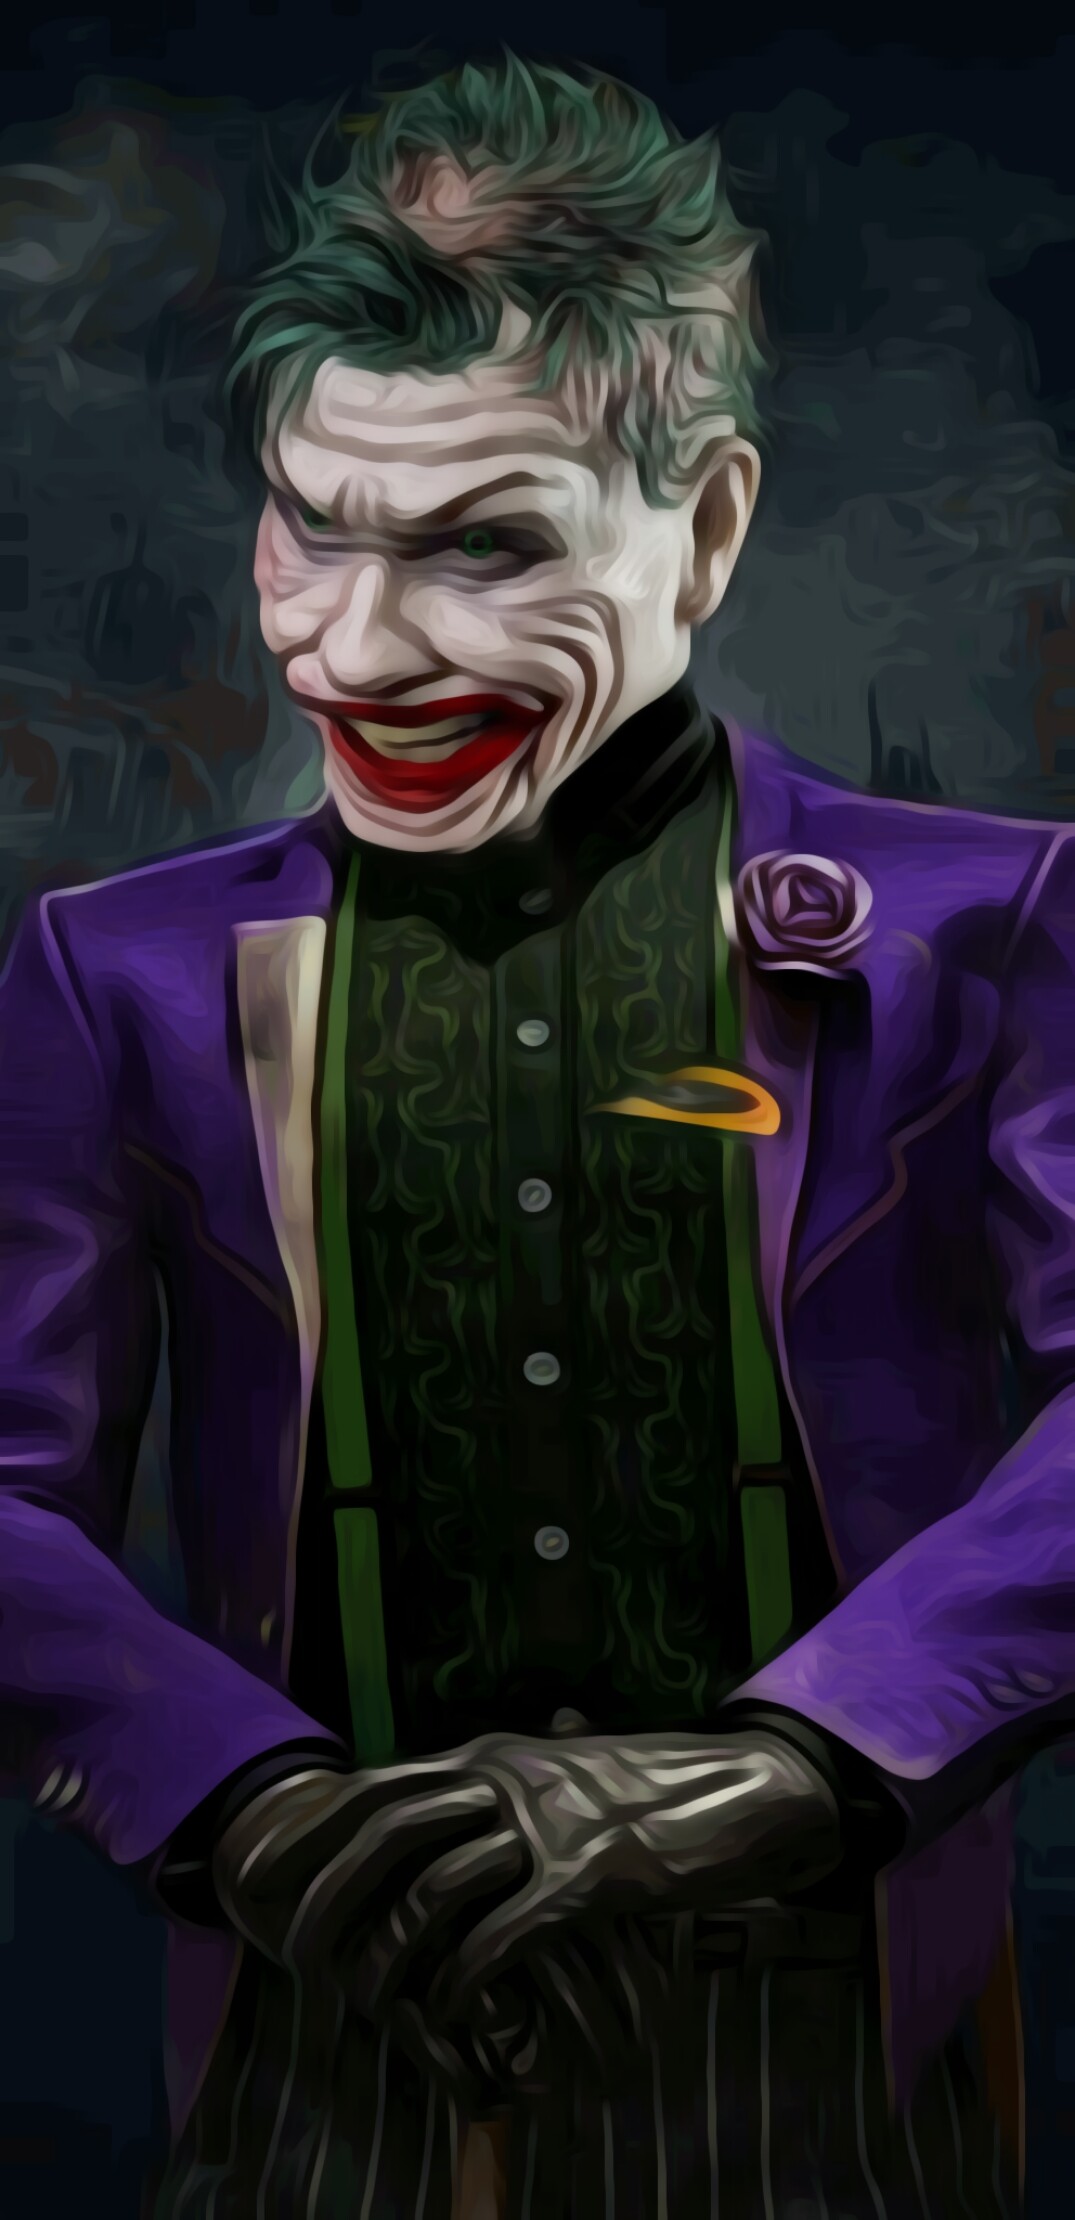 ArtStation - Barry keoghan Joker